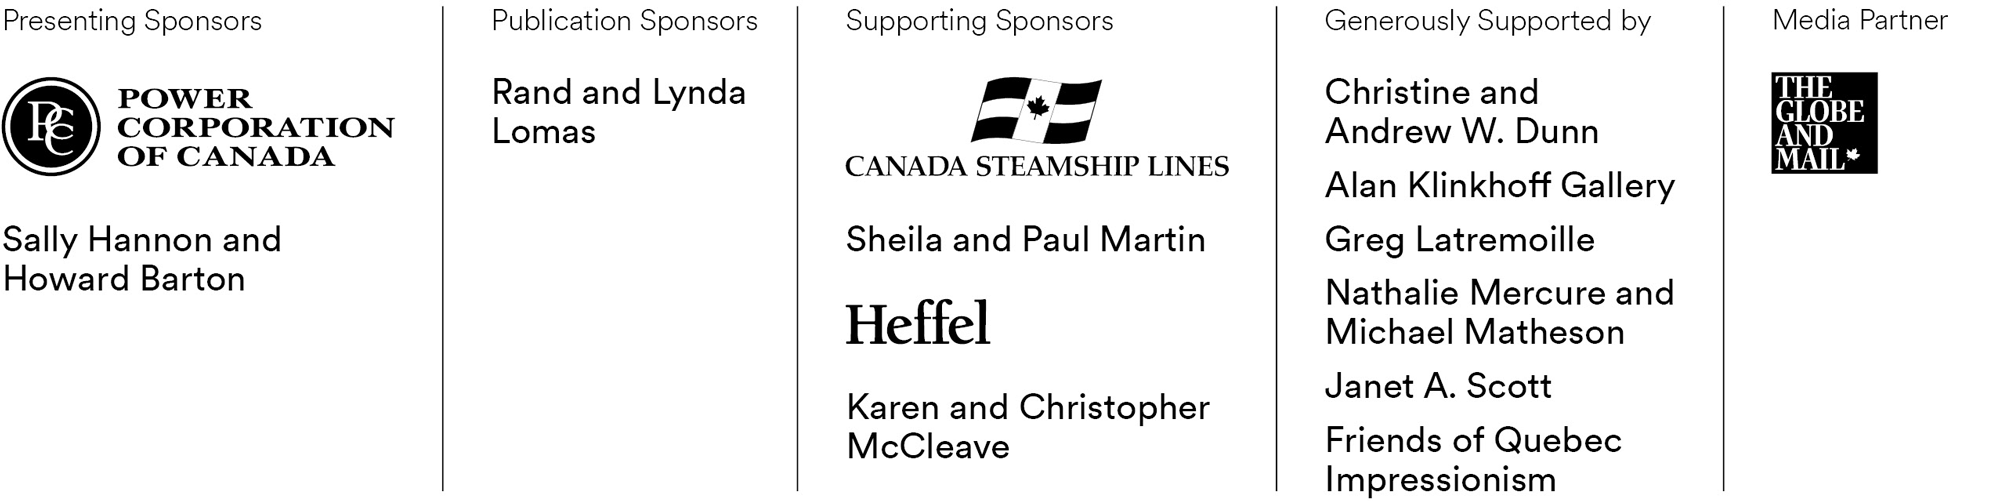 sponsors list